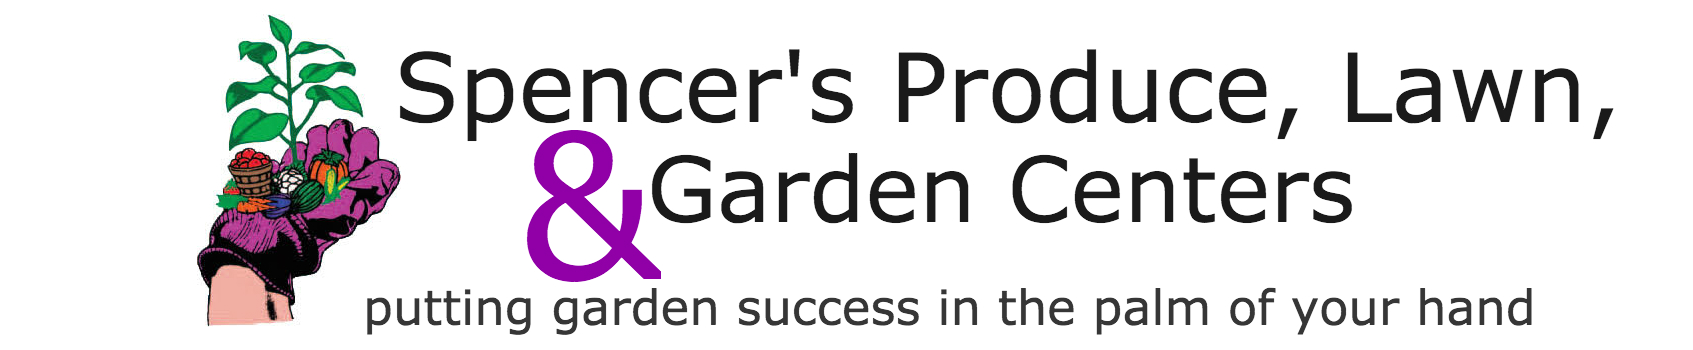 Spencer's Produce, Lawn, & Garden Centers, Inc